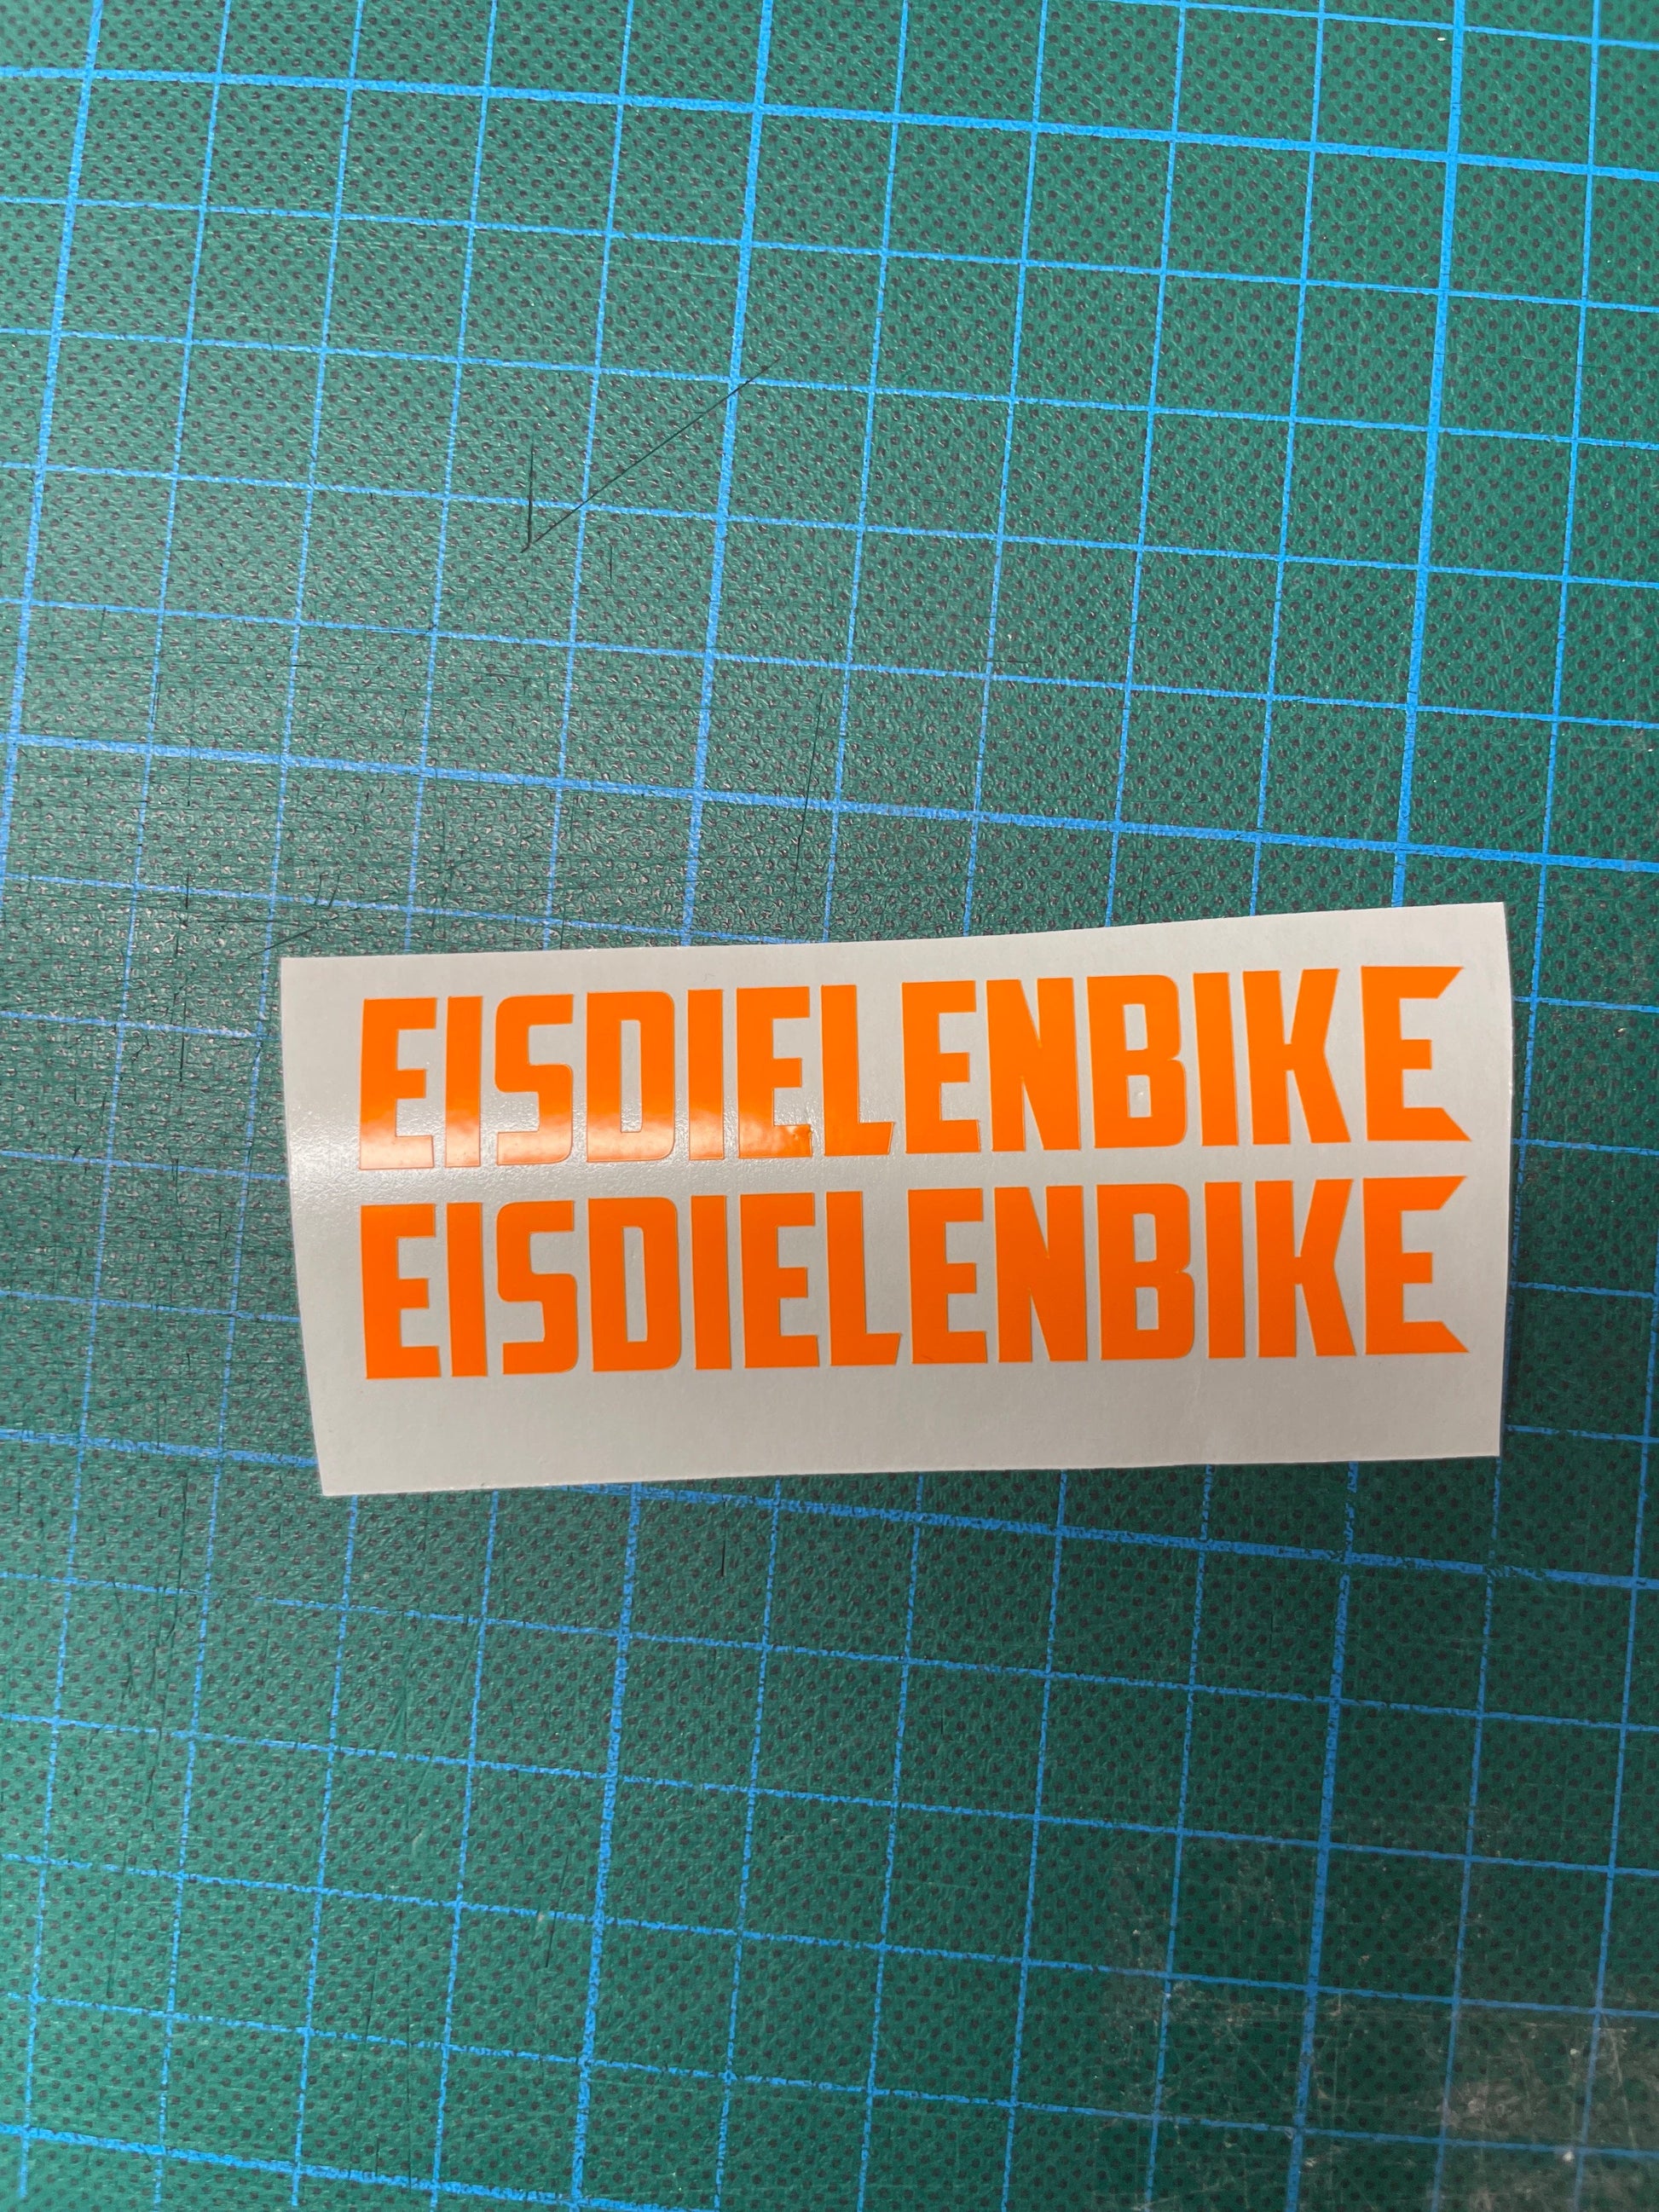 Sons of Battery - E-MTB Brand & Community Folien Neonorange EISDIELENBIKE E-Bike-Community